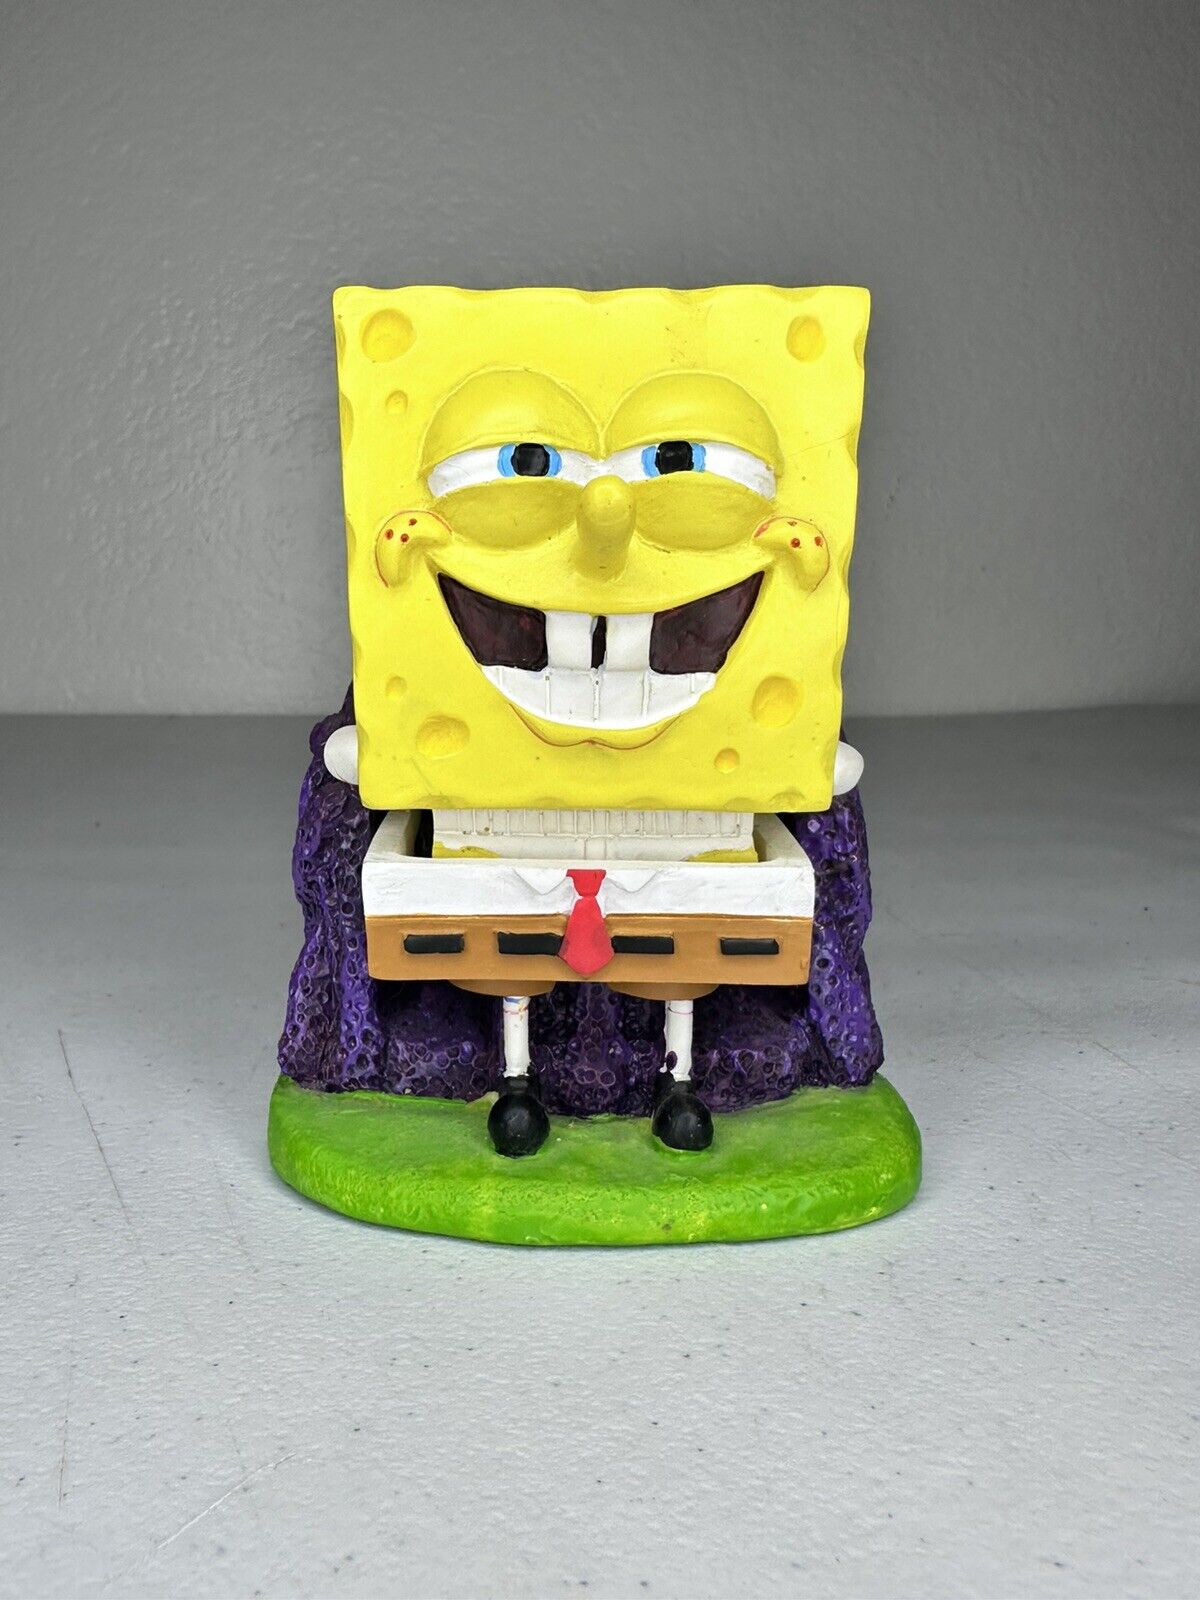 SpongeBob SquarePants Collectible 2002 Viacom Bobblehead Figurine - Coral Base